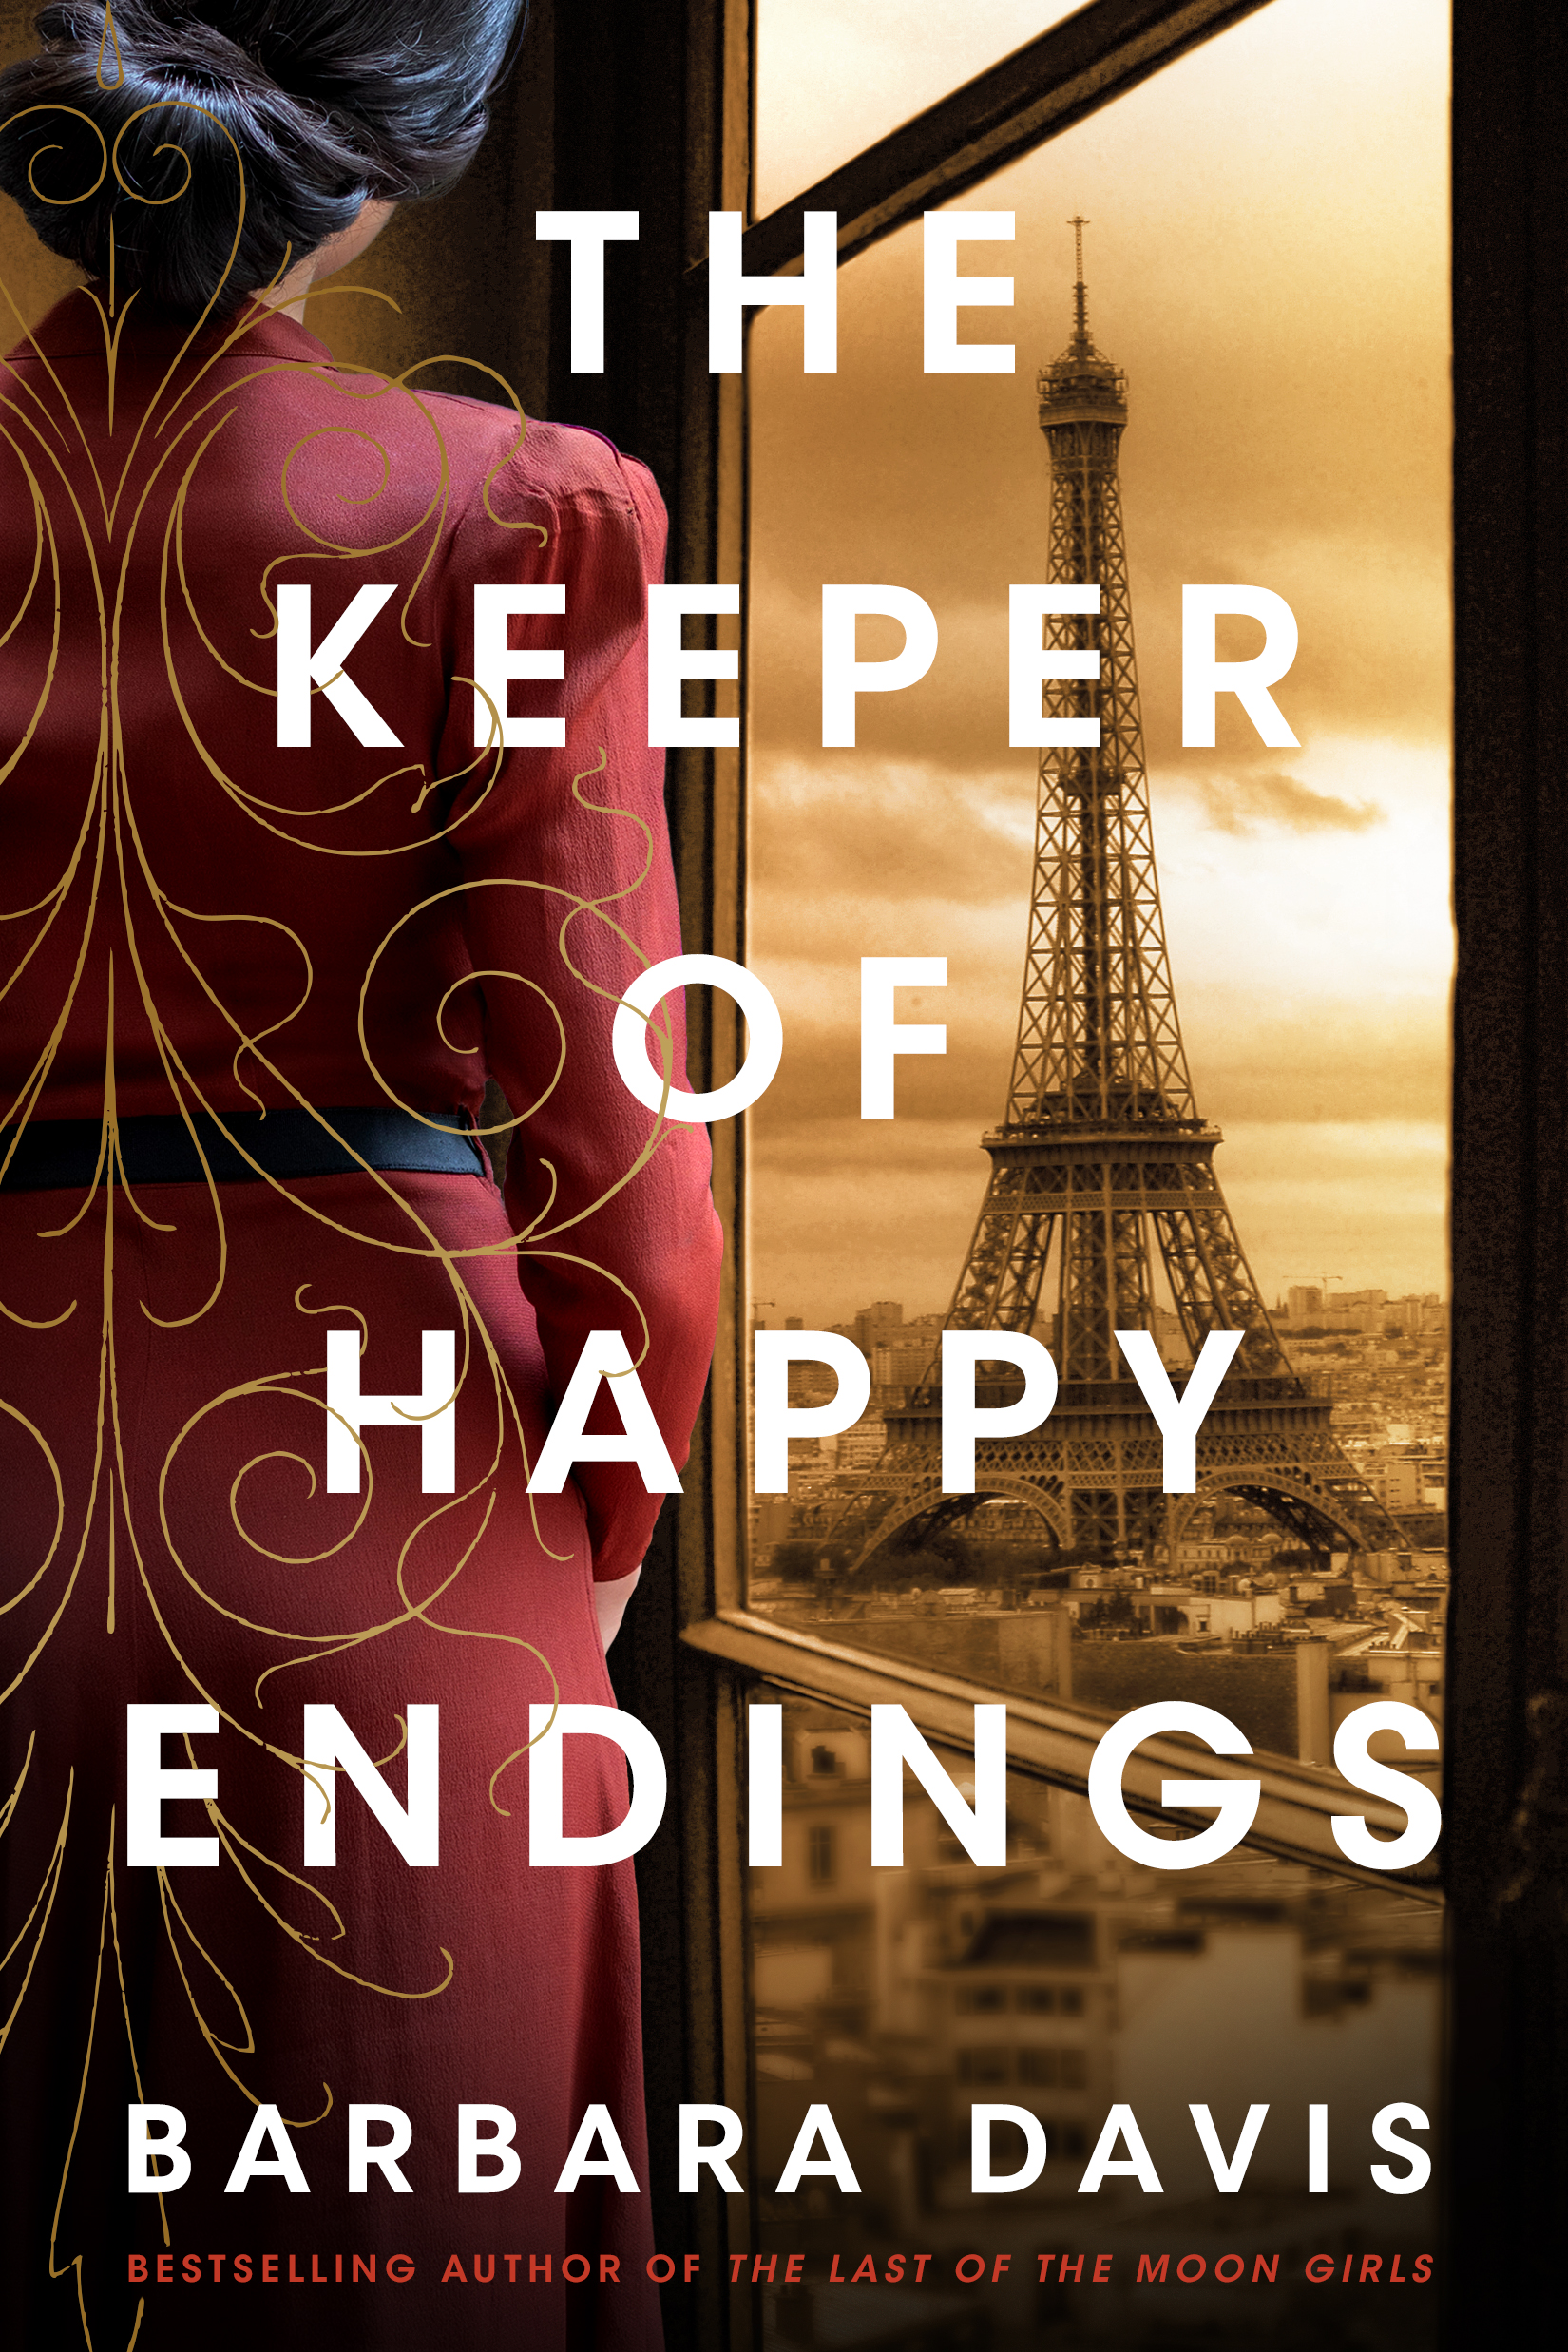 Davis-The Keeper of Happy Endings-28150-CV-FT